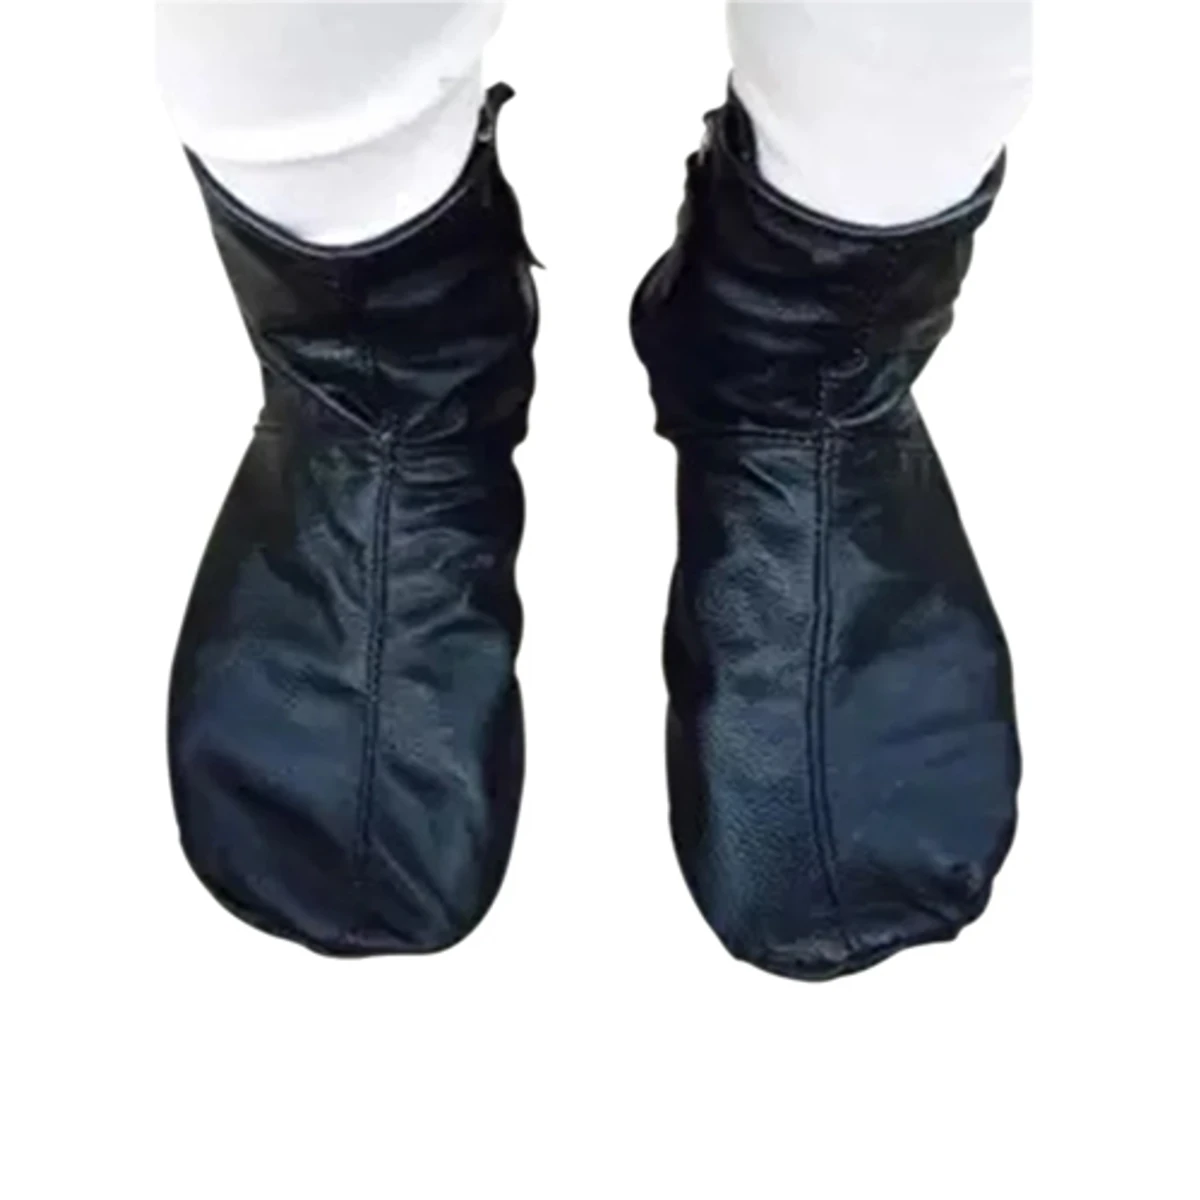 Black Color Pakistani Leather Zipper Socks for Men & Women (100% Leather)